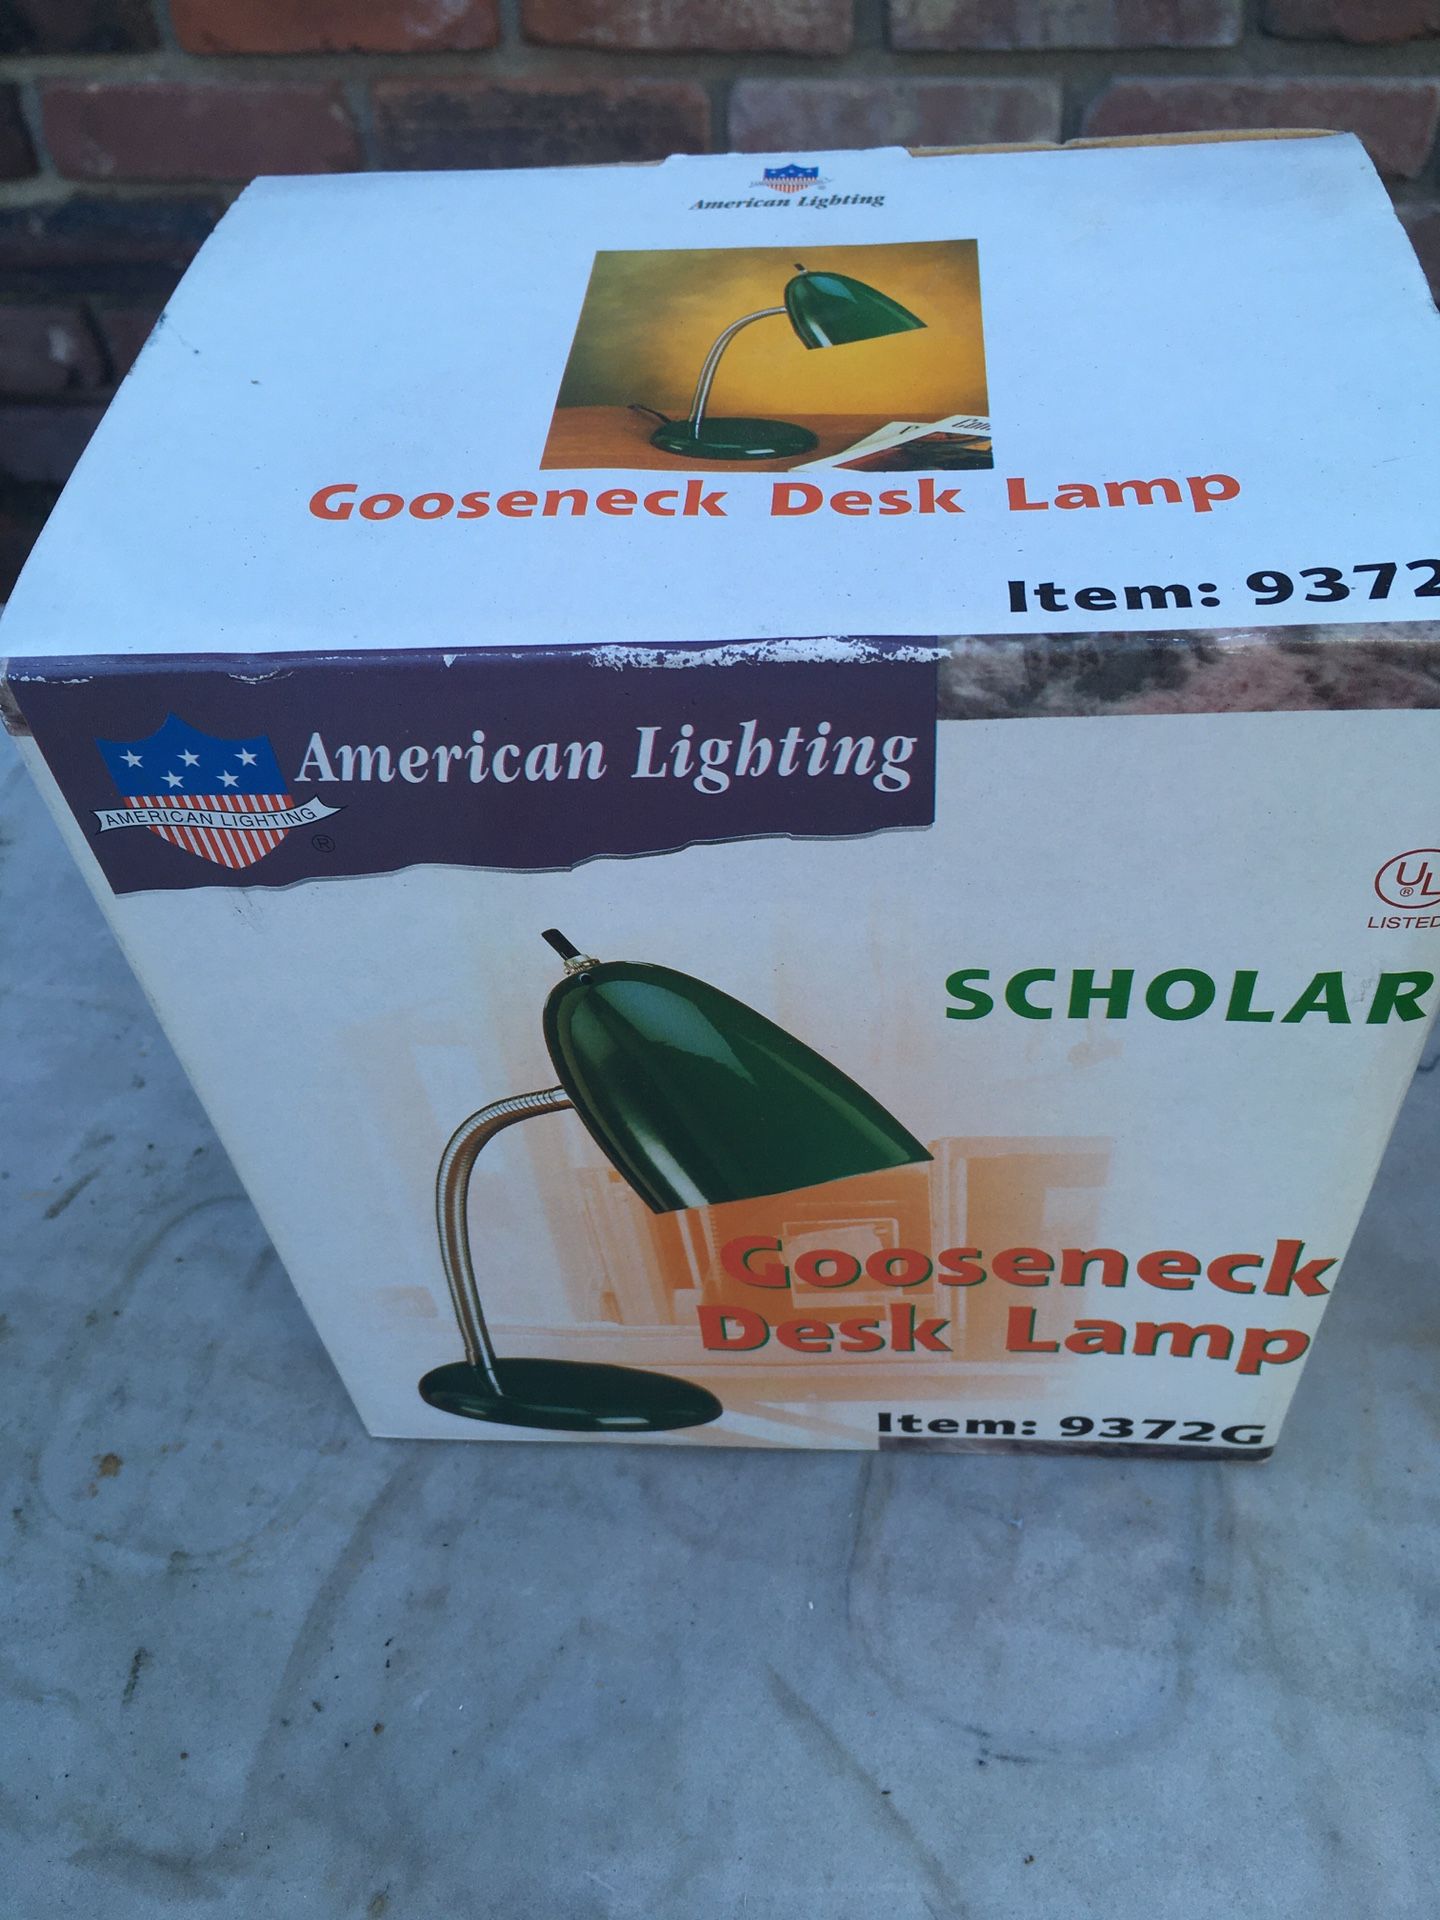 New Gooseneck desk lamp item number 9372G